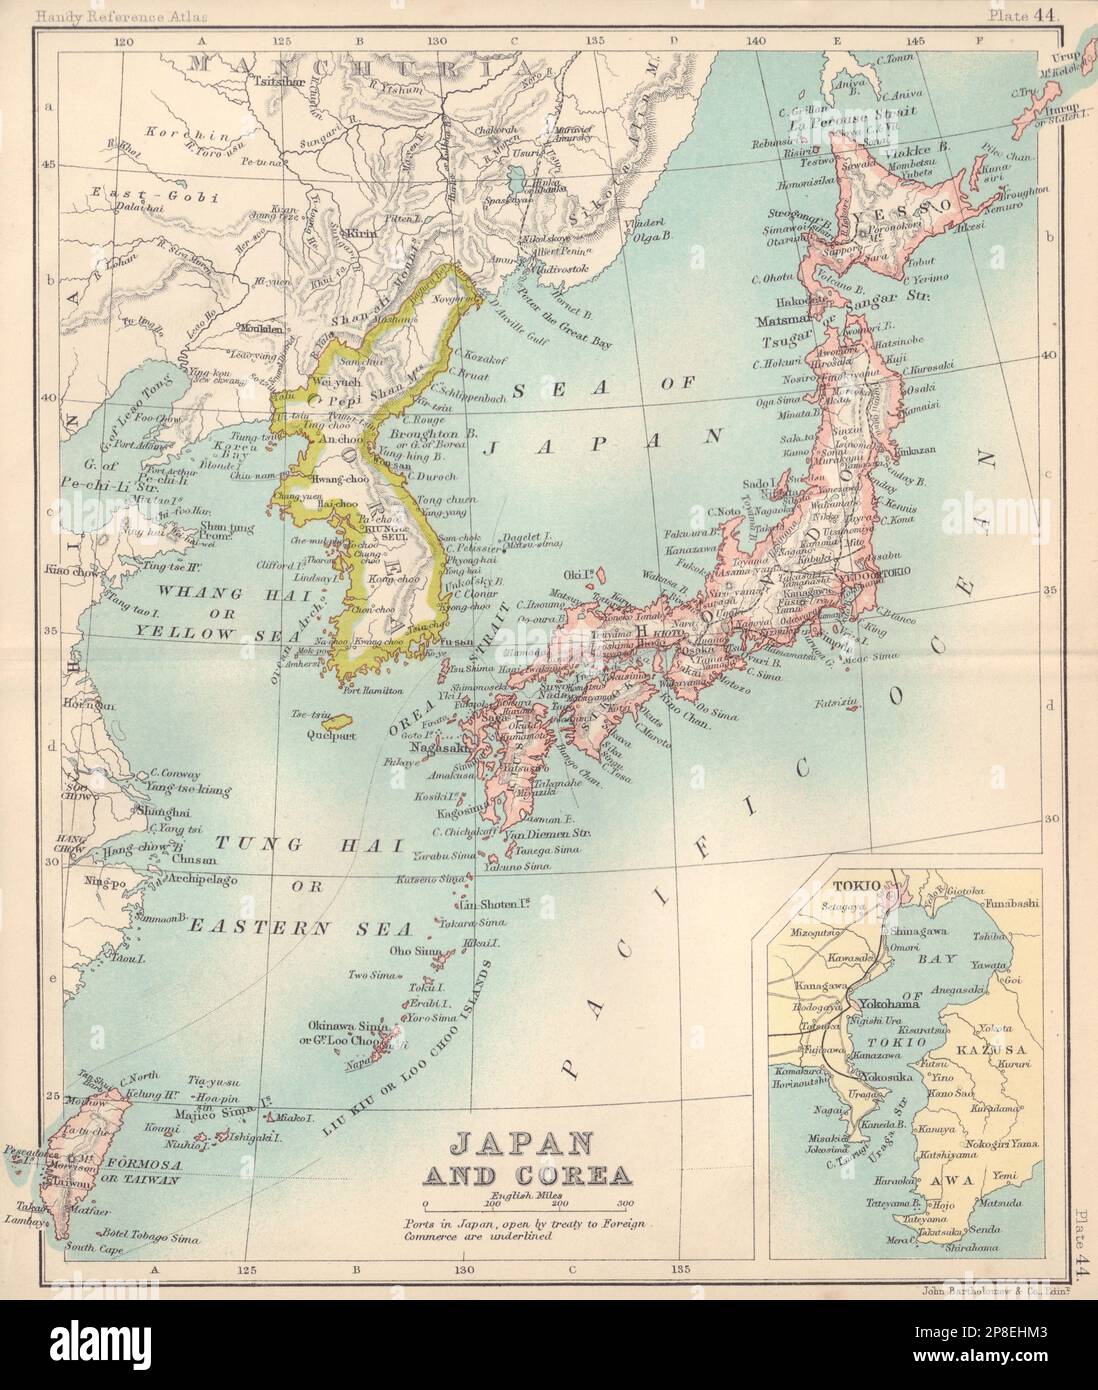 Japan and Korea including Formosa/Taiwan. East Asia. BARTHOLOMEW 1898 old map Stock Photo